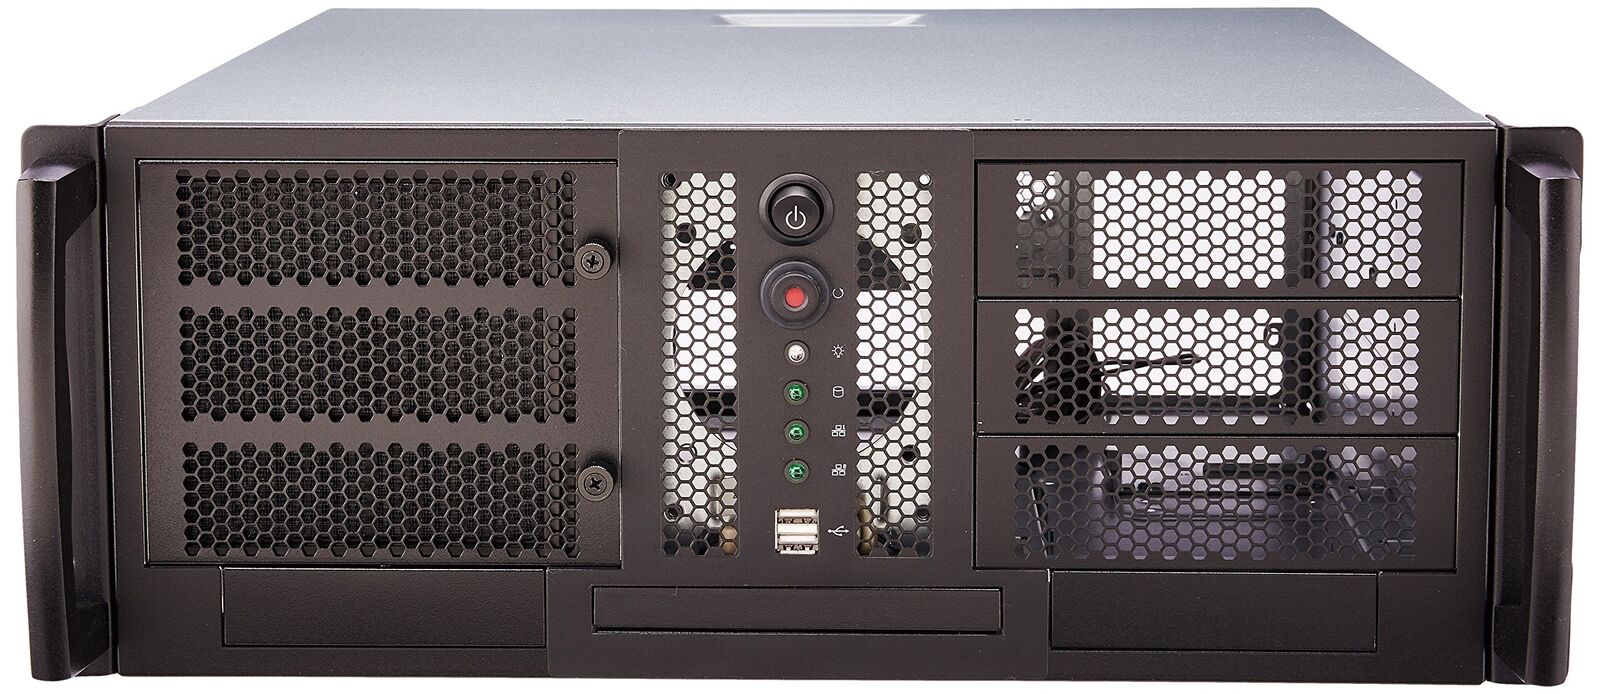 CHENBRO RM42300-F 1.2 mm SGCC 4U Rackmount Server Case 3 External 5.25